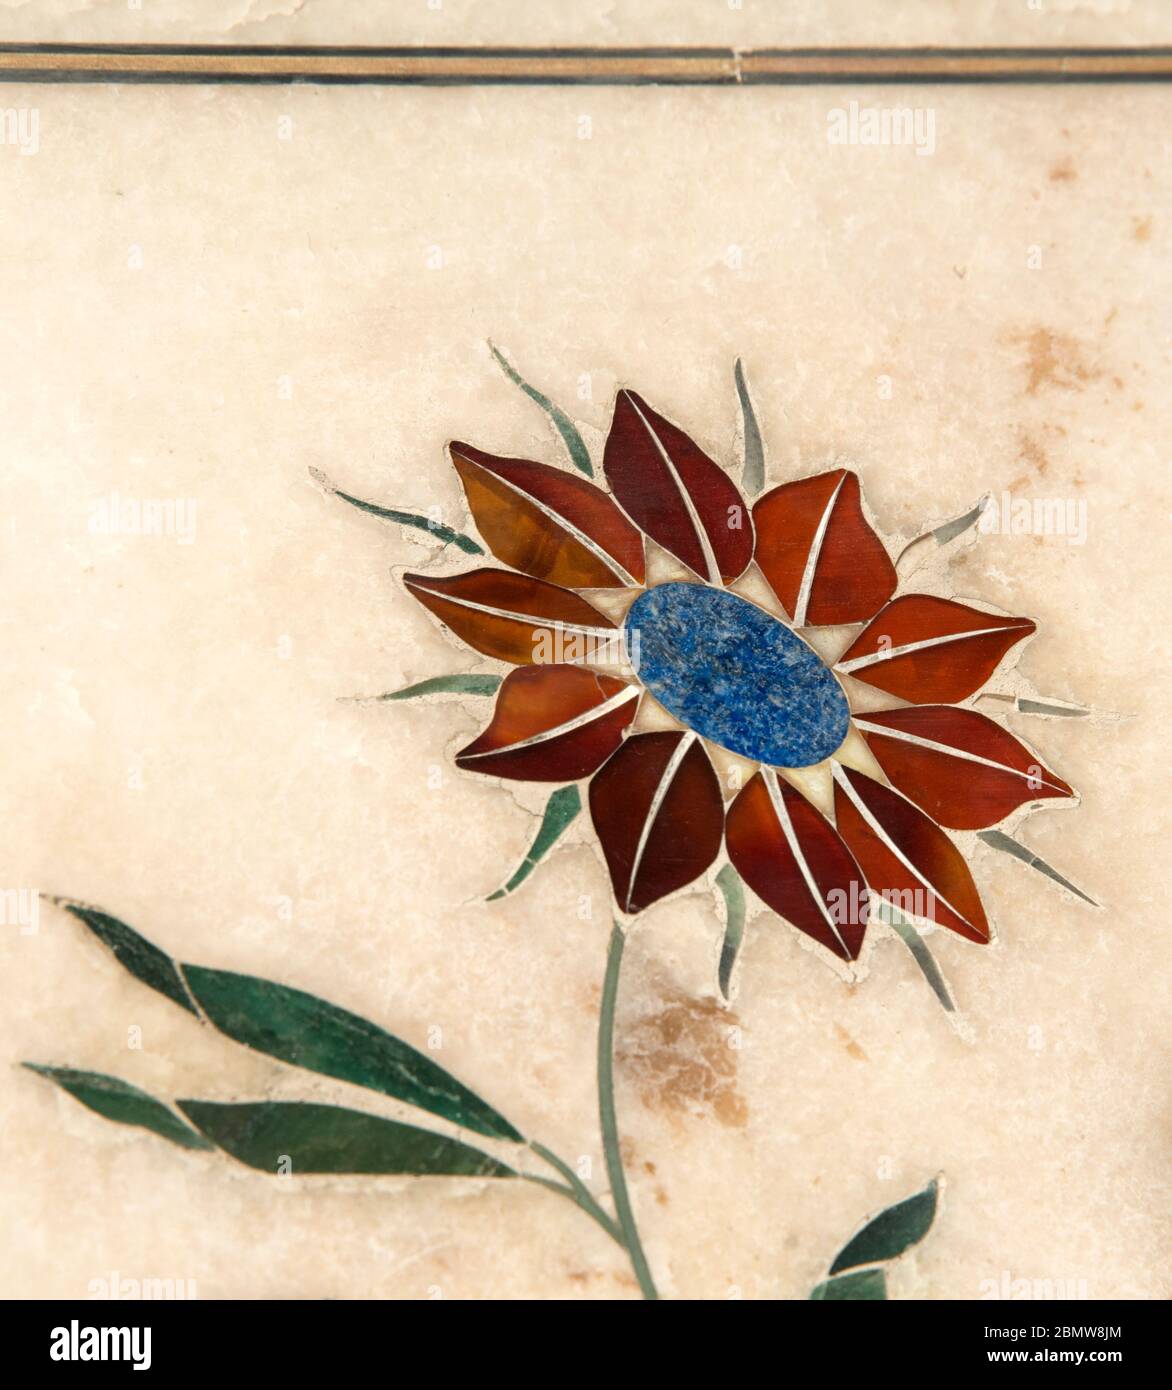 Fleur en gros plan avec des stiones semi-présious incrustées en marbre Rang Mahal Red fort Delhi Inde Banque D'Images